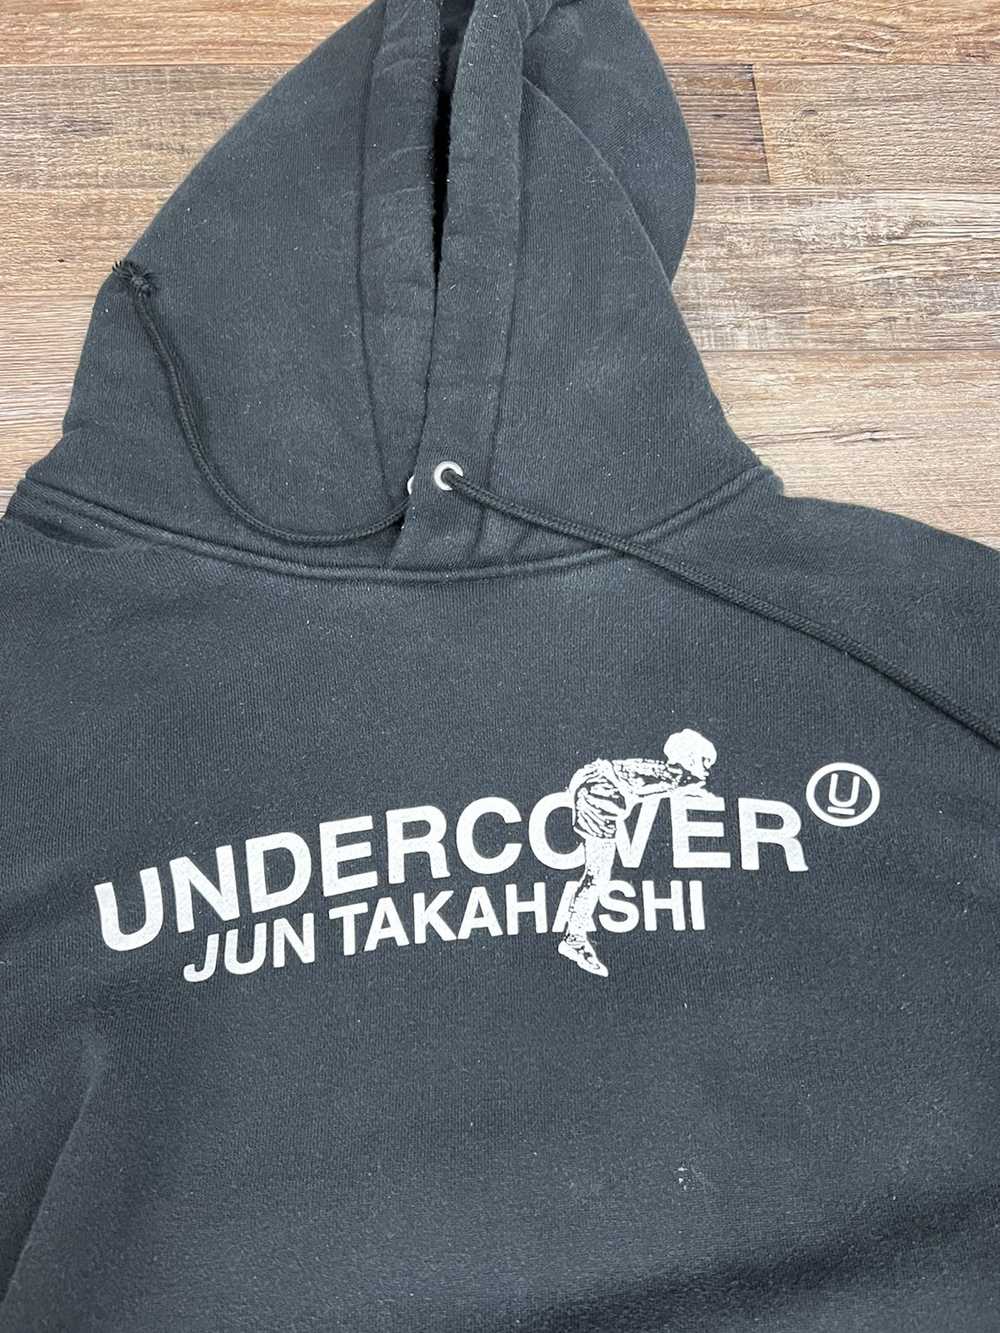 Jun Takahashi × Undercover Undercover Jun Takahas… - image 2